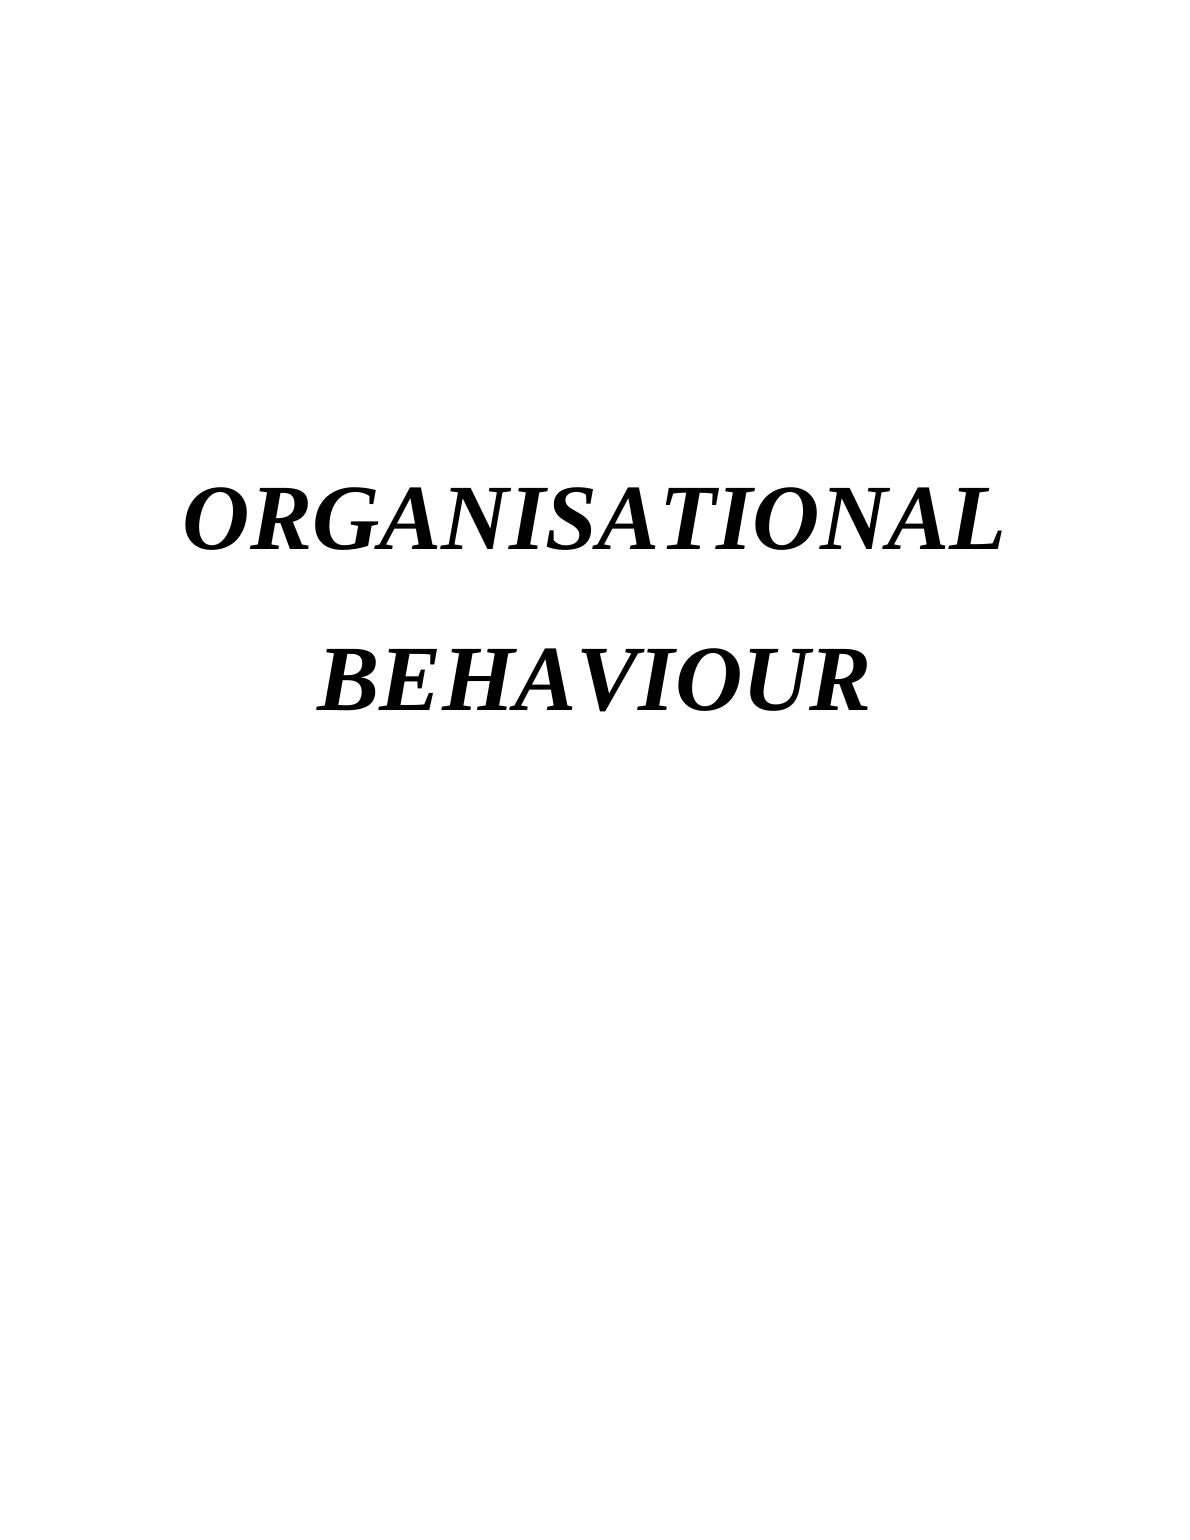 Organisational Behaviour Assignment- A David & Co Limited_1